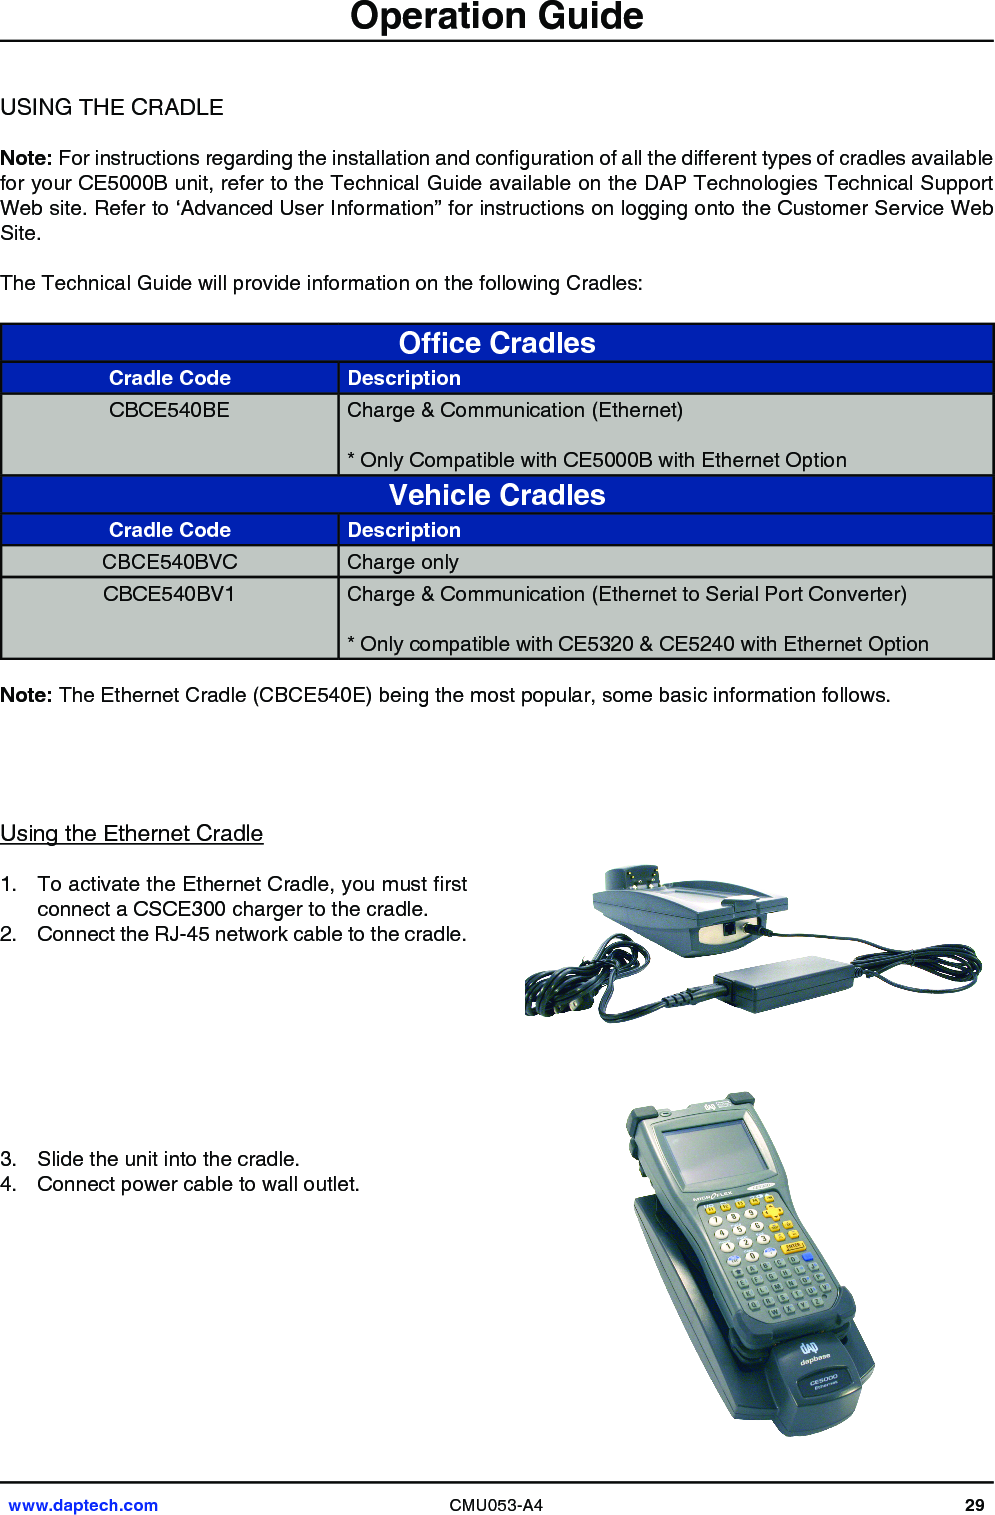 www.daptech.com CMU053-A4 29Note:Site.Ofce CradlesCradle Code Description Vehicle CradlesCradle Code Description  Note: 1.  2.        3. 4. Operation Guide